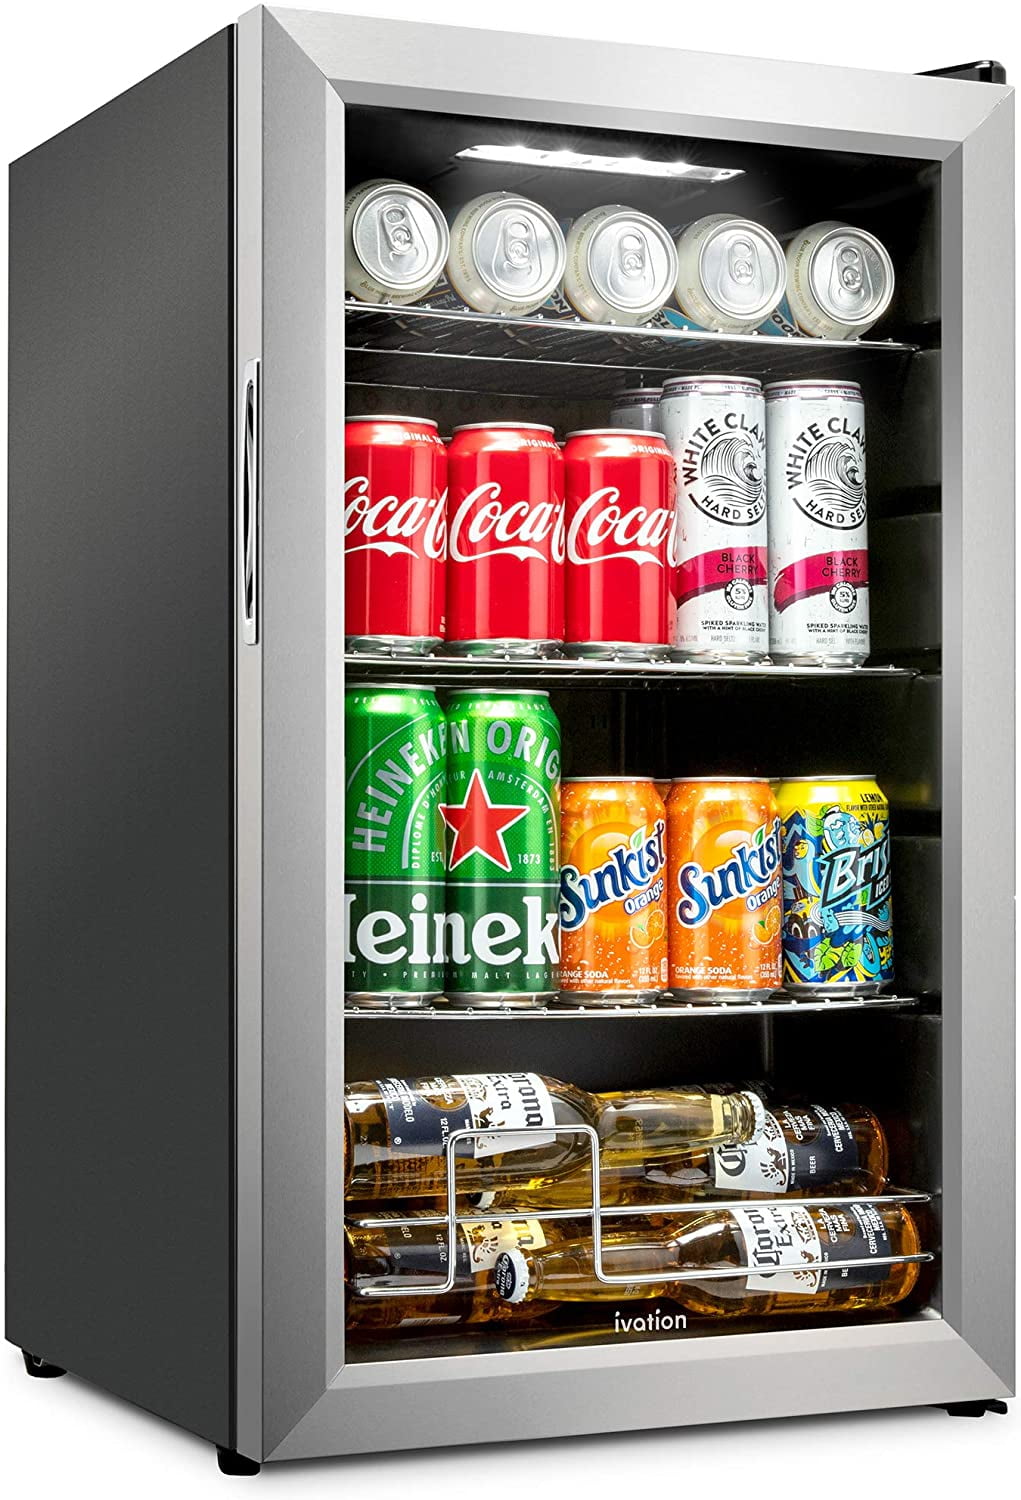 120 Can Beverage Refrigerator – hOmeLabs